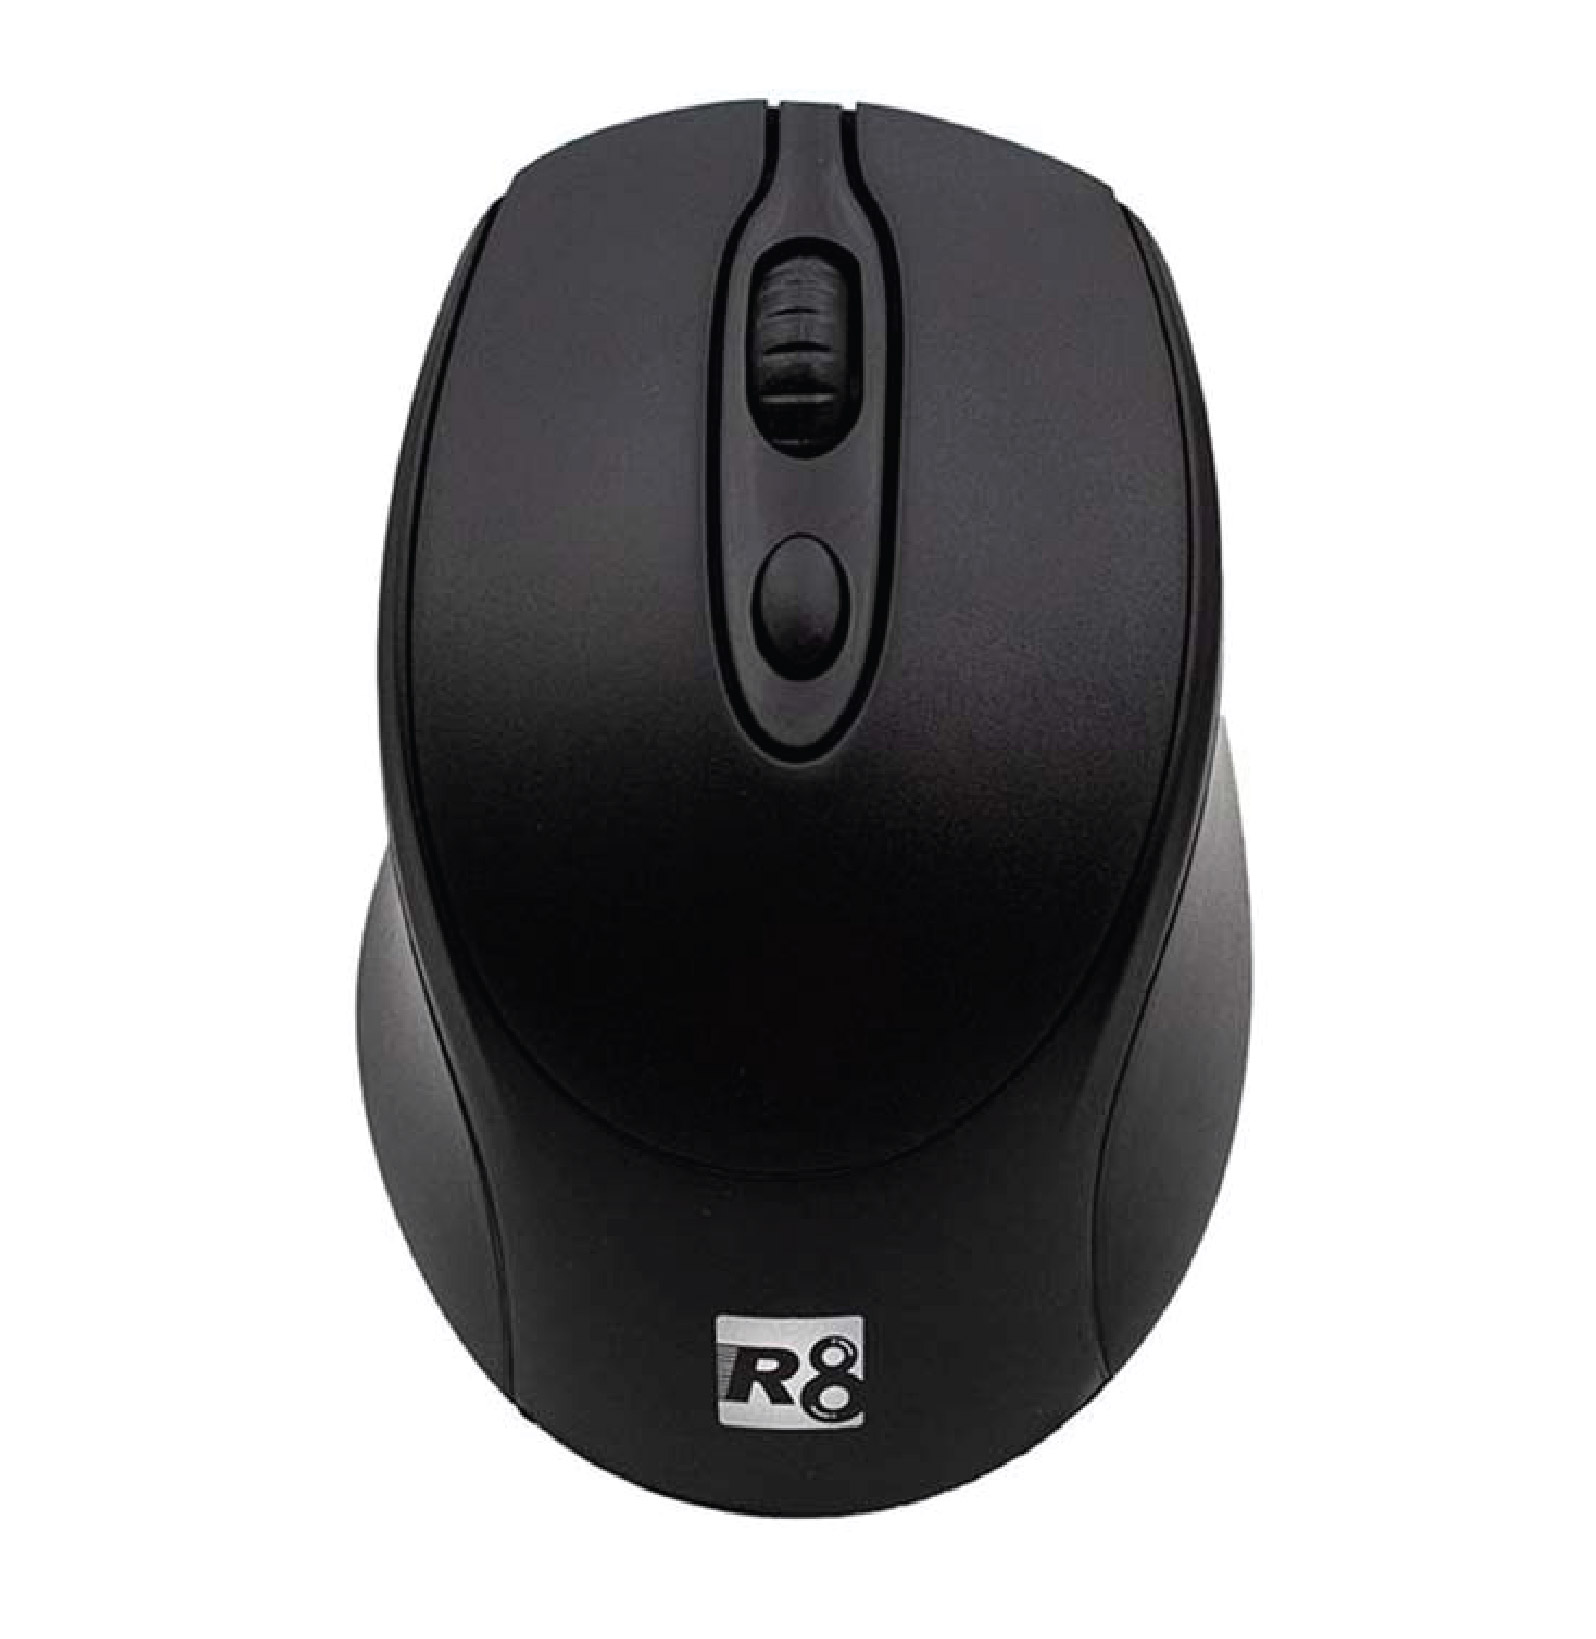 R8 1713 Mouse